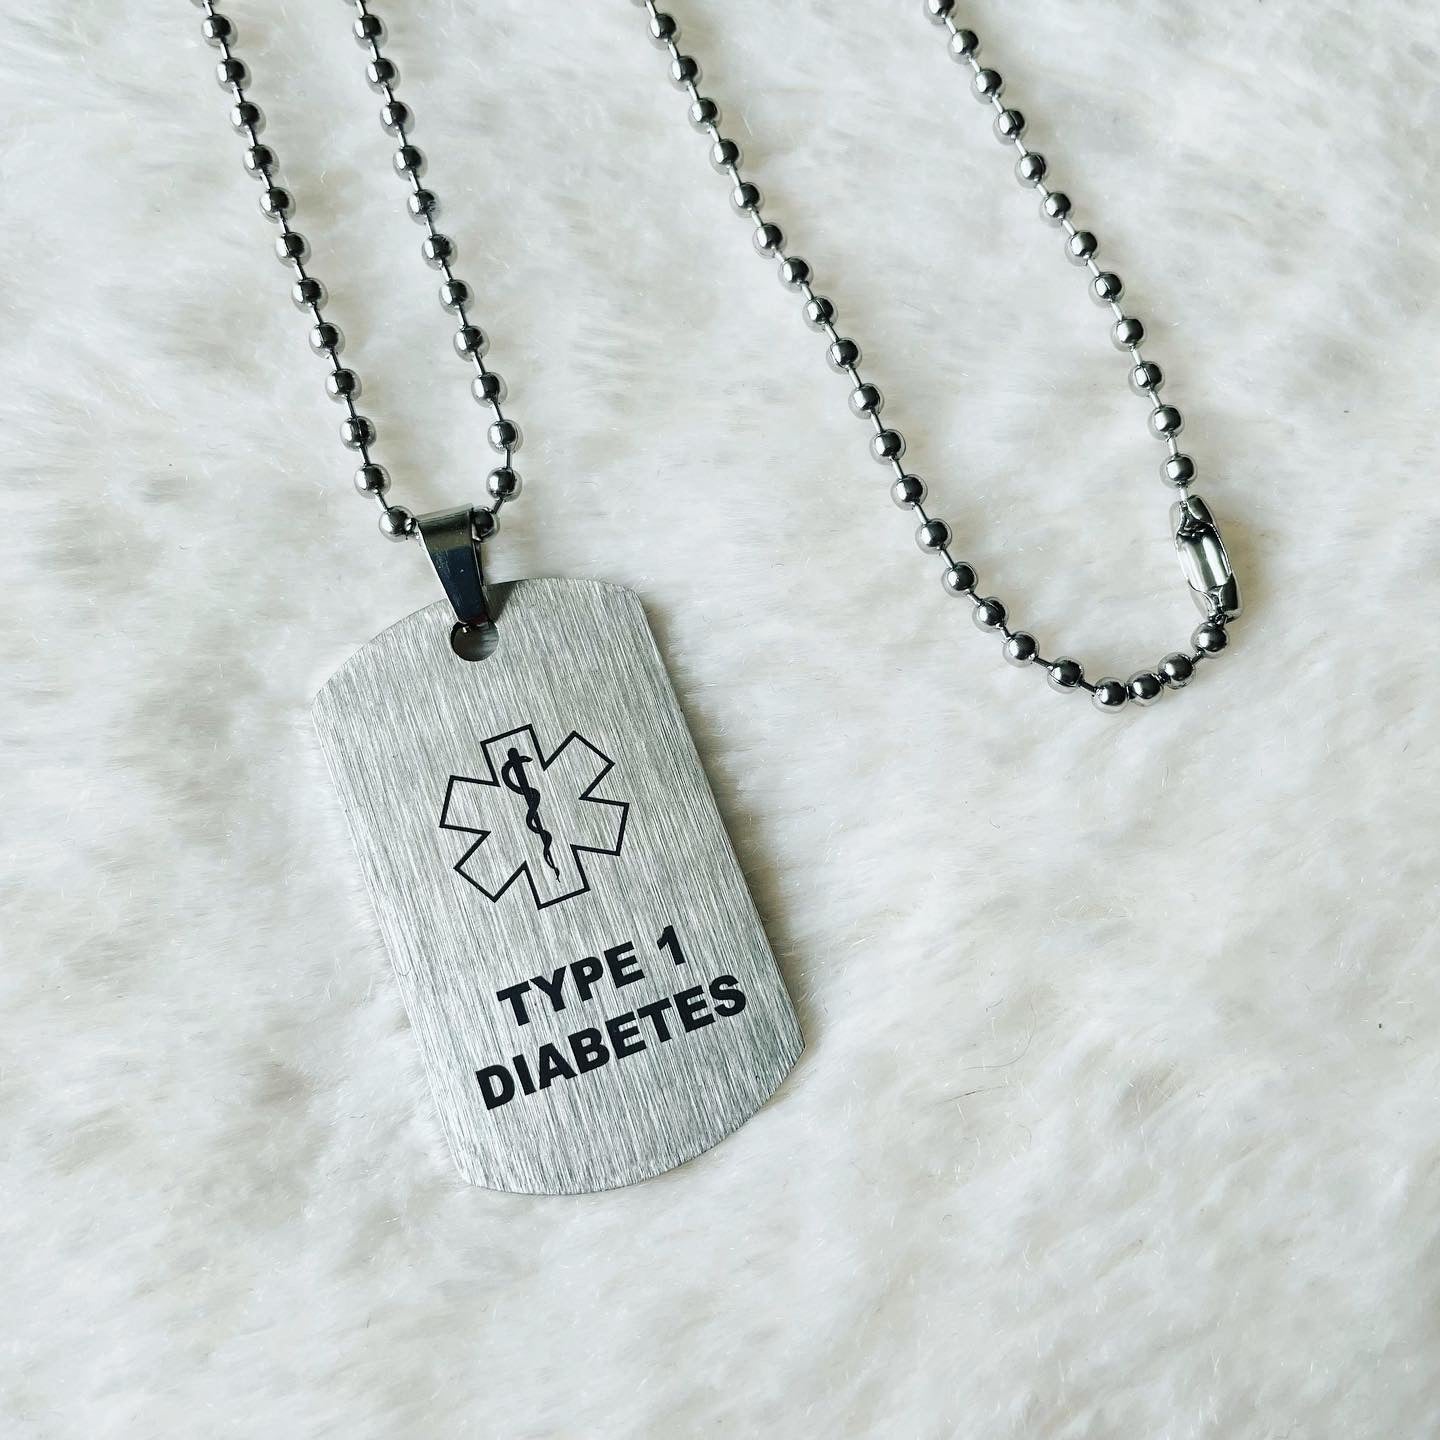 Type 1 Diabetes Necklace